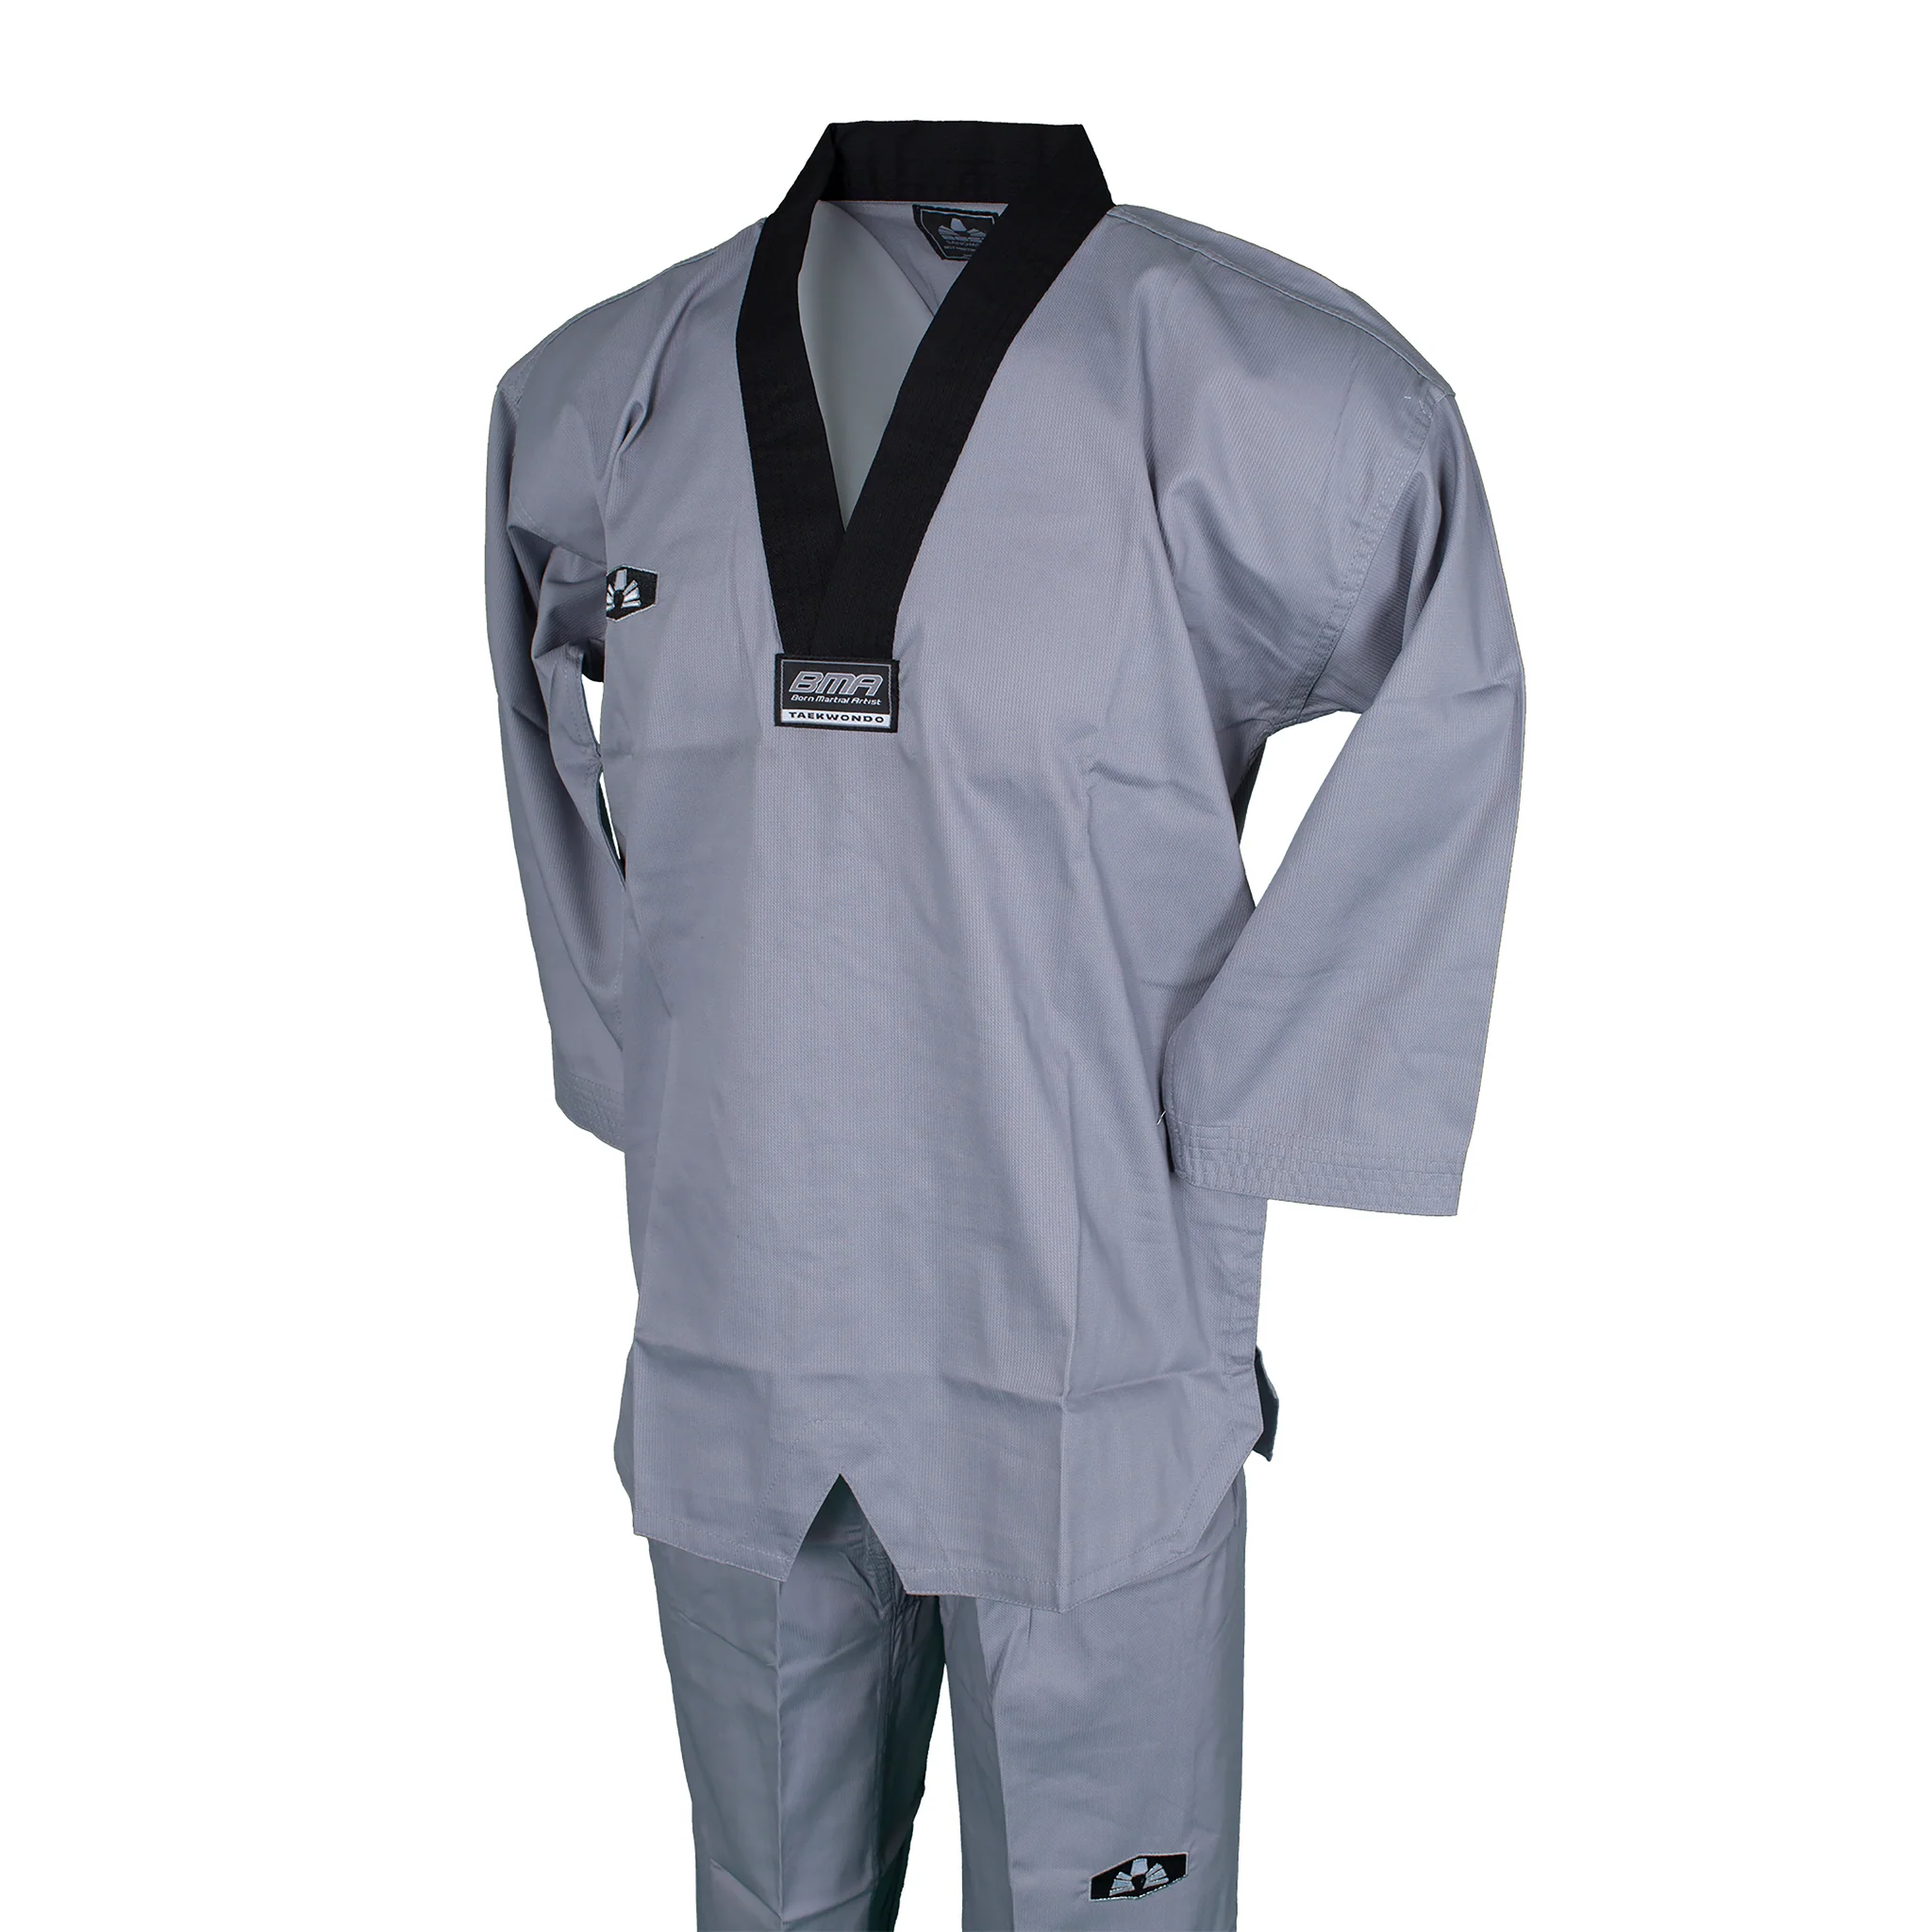 grey suit for martial arts classes like taekwondo or karate